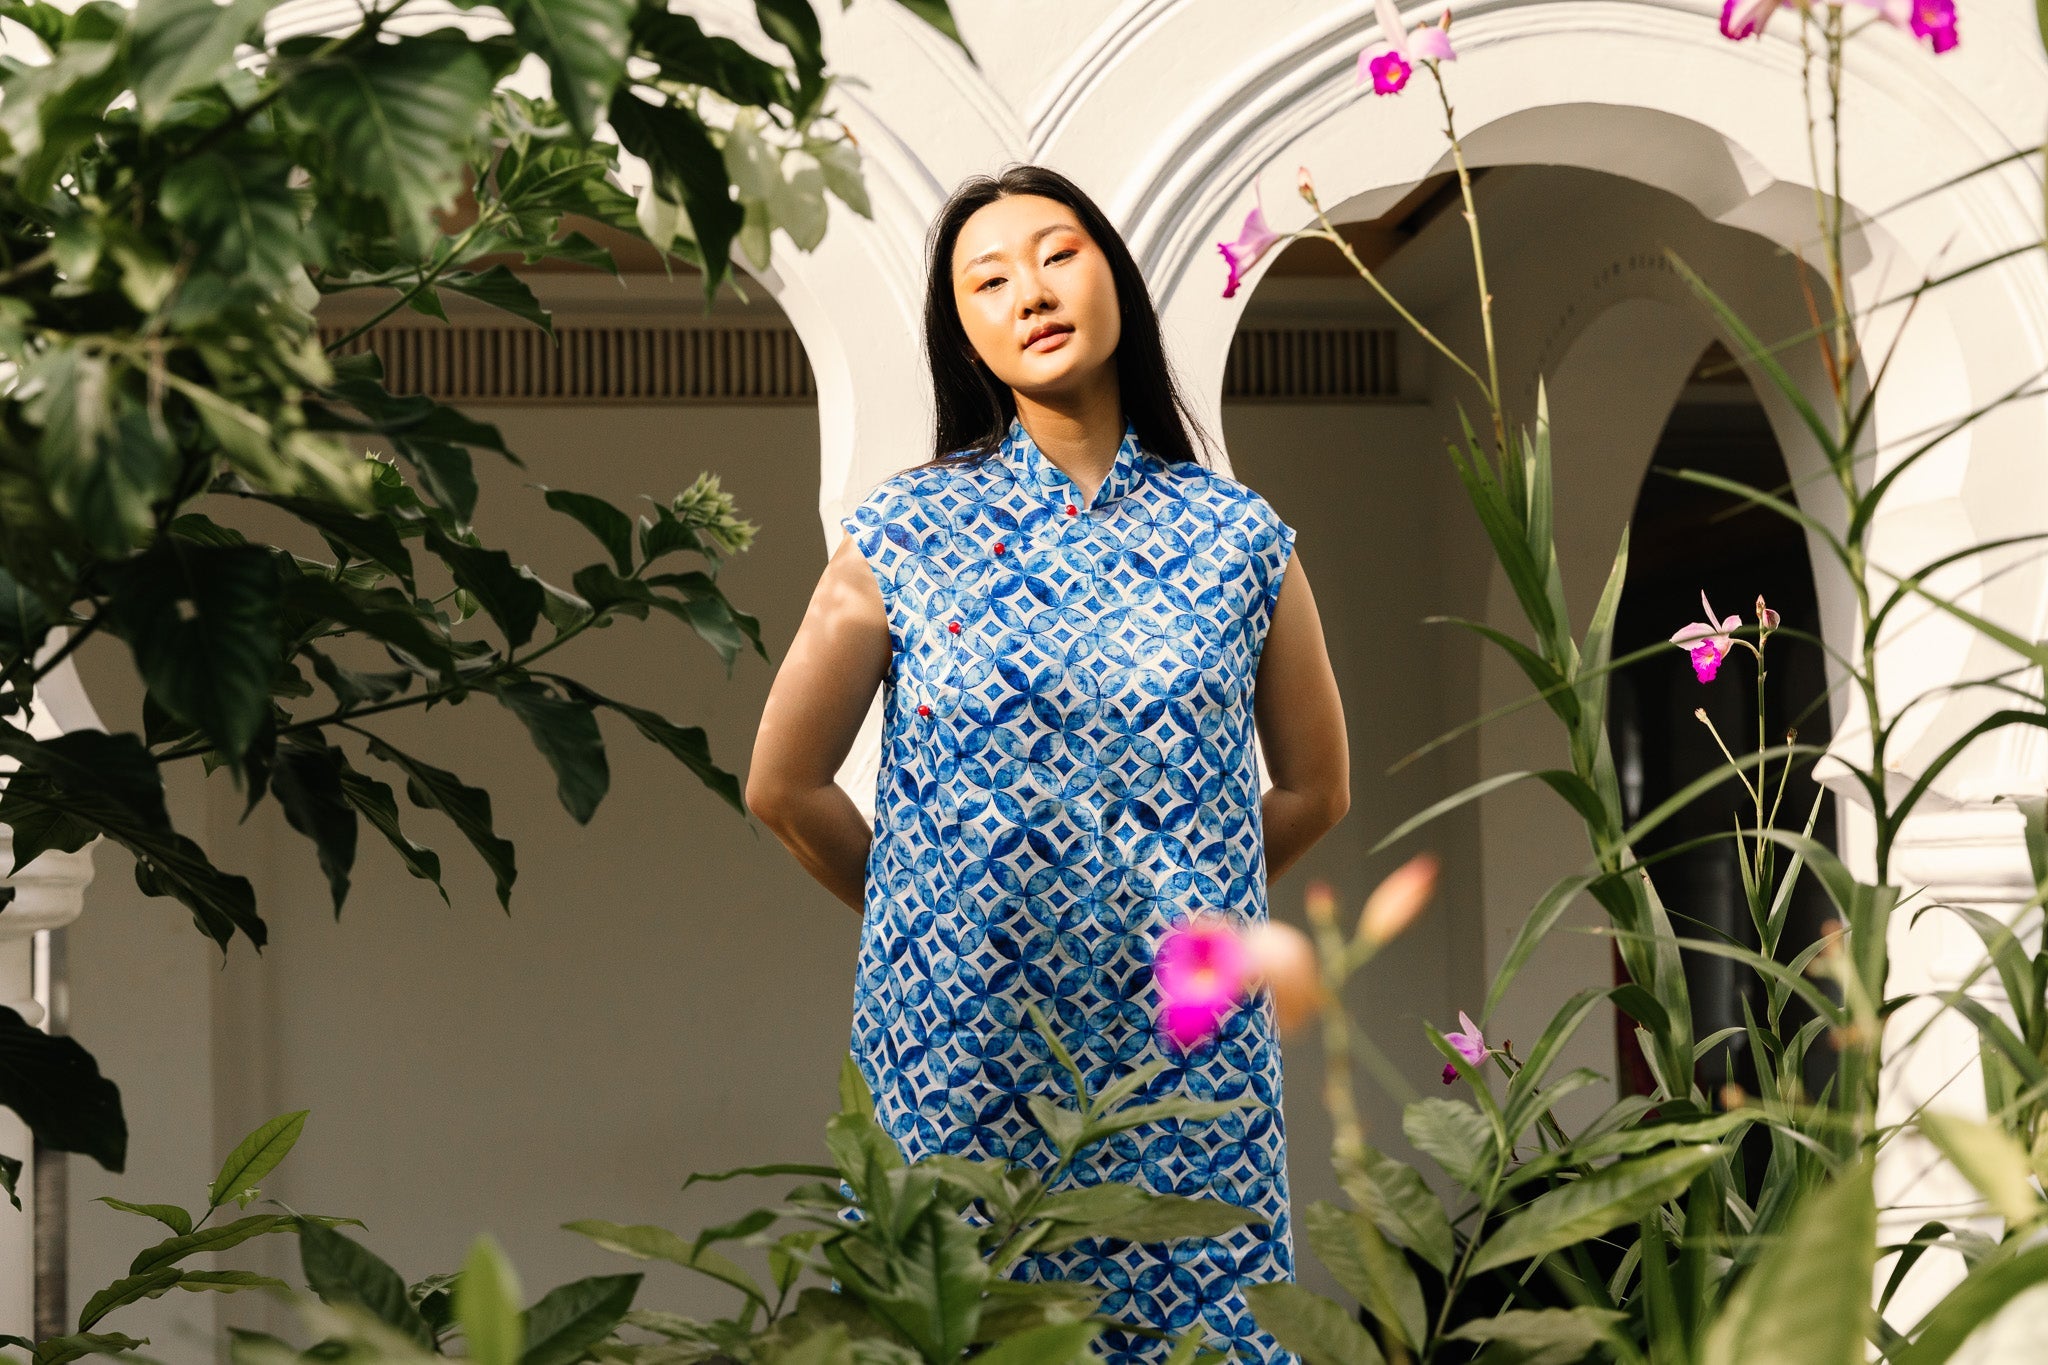 Women's cheongsam dress by local designer You Living, worn outdoors in Singapore 